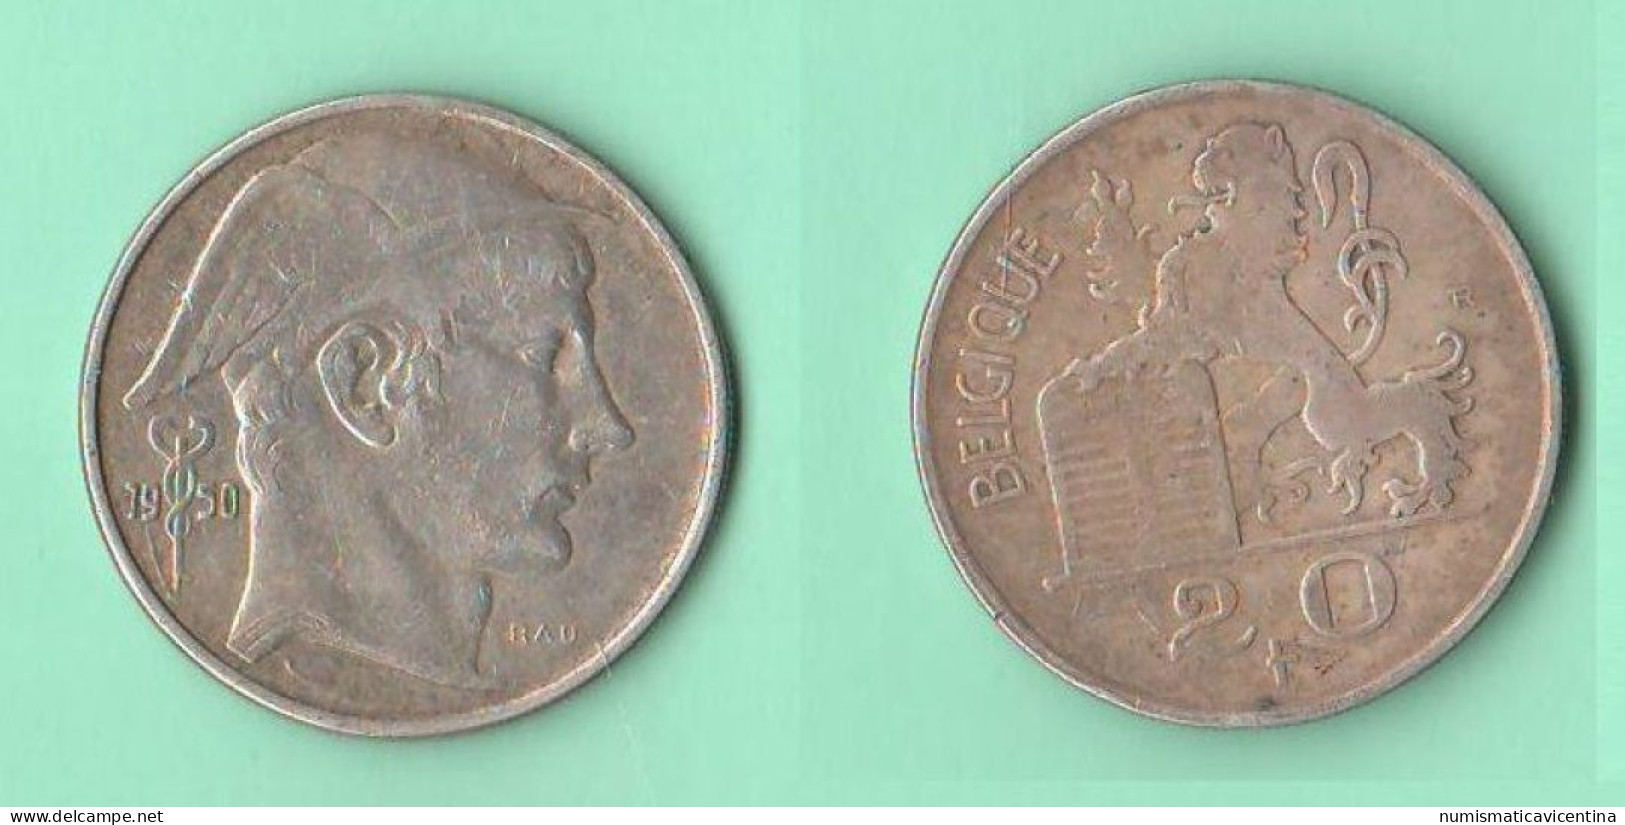 Belgio 20 Francs 1950 Mercury Belgie Belgium Belgique Silver Coin - 50 Franc